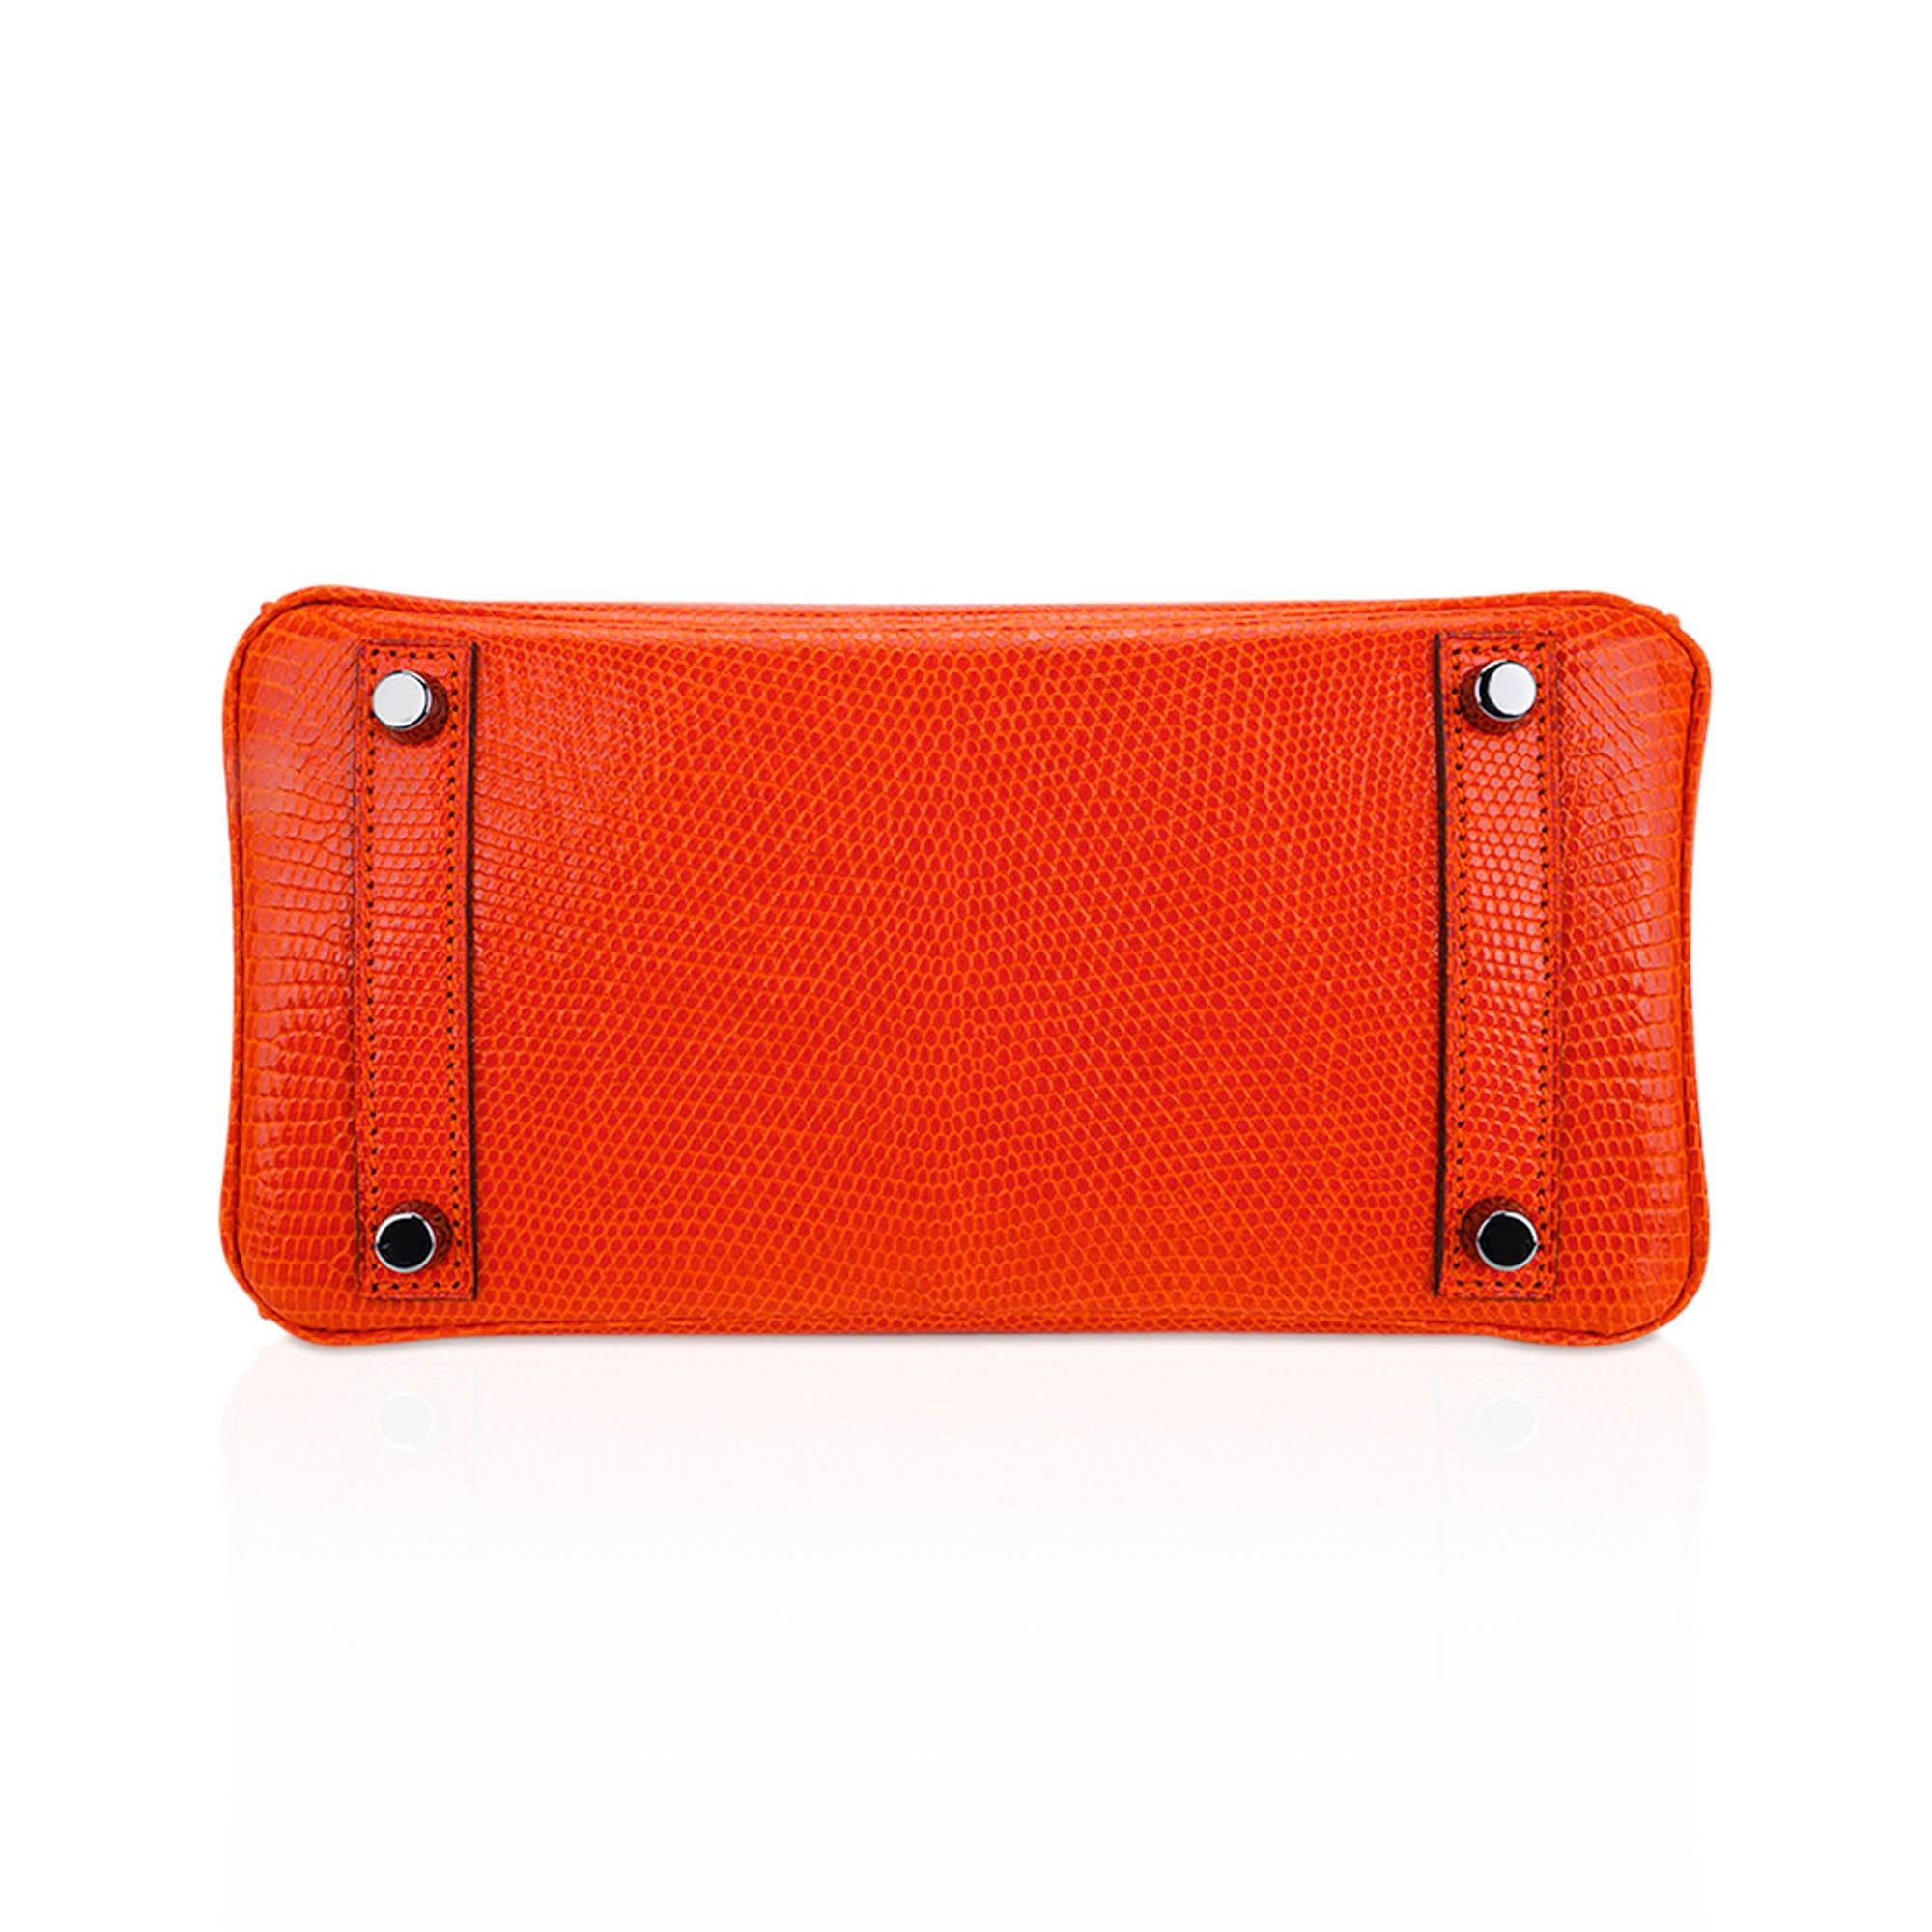 Hermes Birkin 25 Orange Tangerine Lizard Limited Edition Bag Ruthenium Hardware For Sale 6